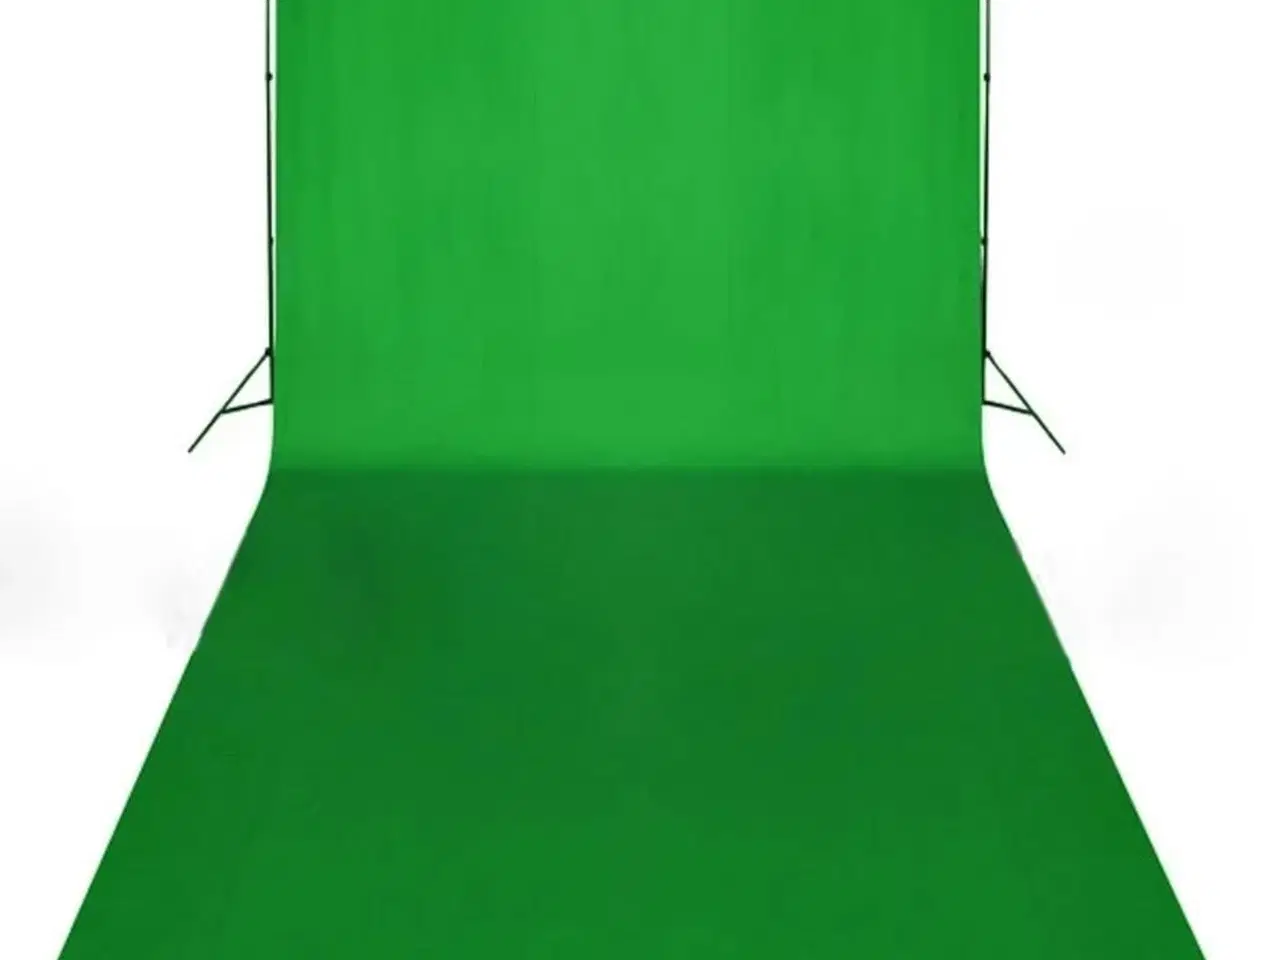 Billede 4 - Fotobaggrund i bomuld grøn 600 x 300 cm chroma key